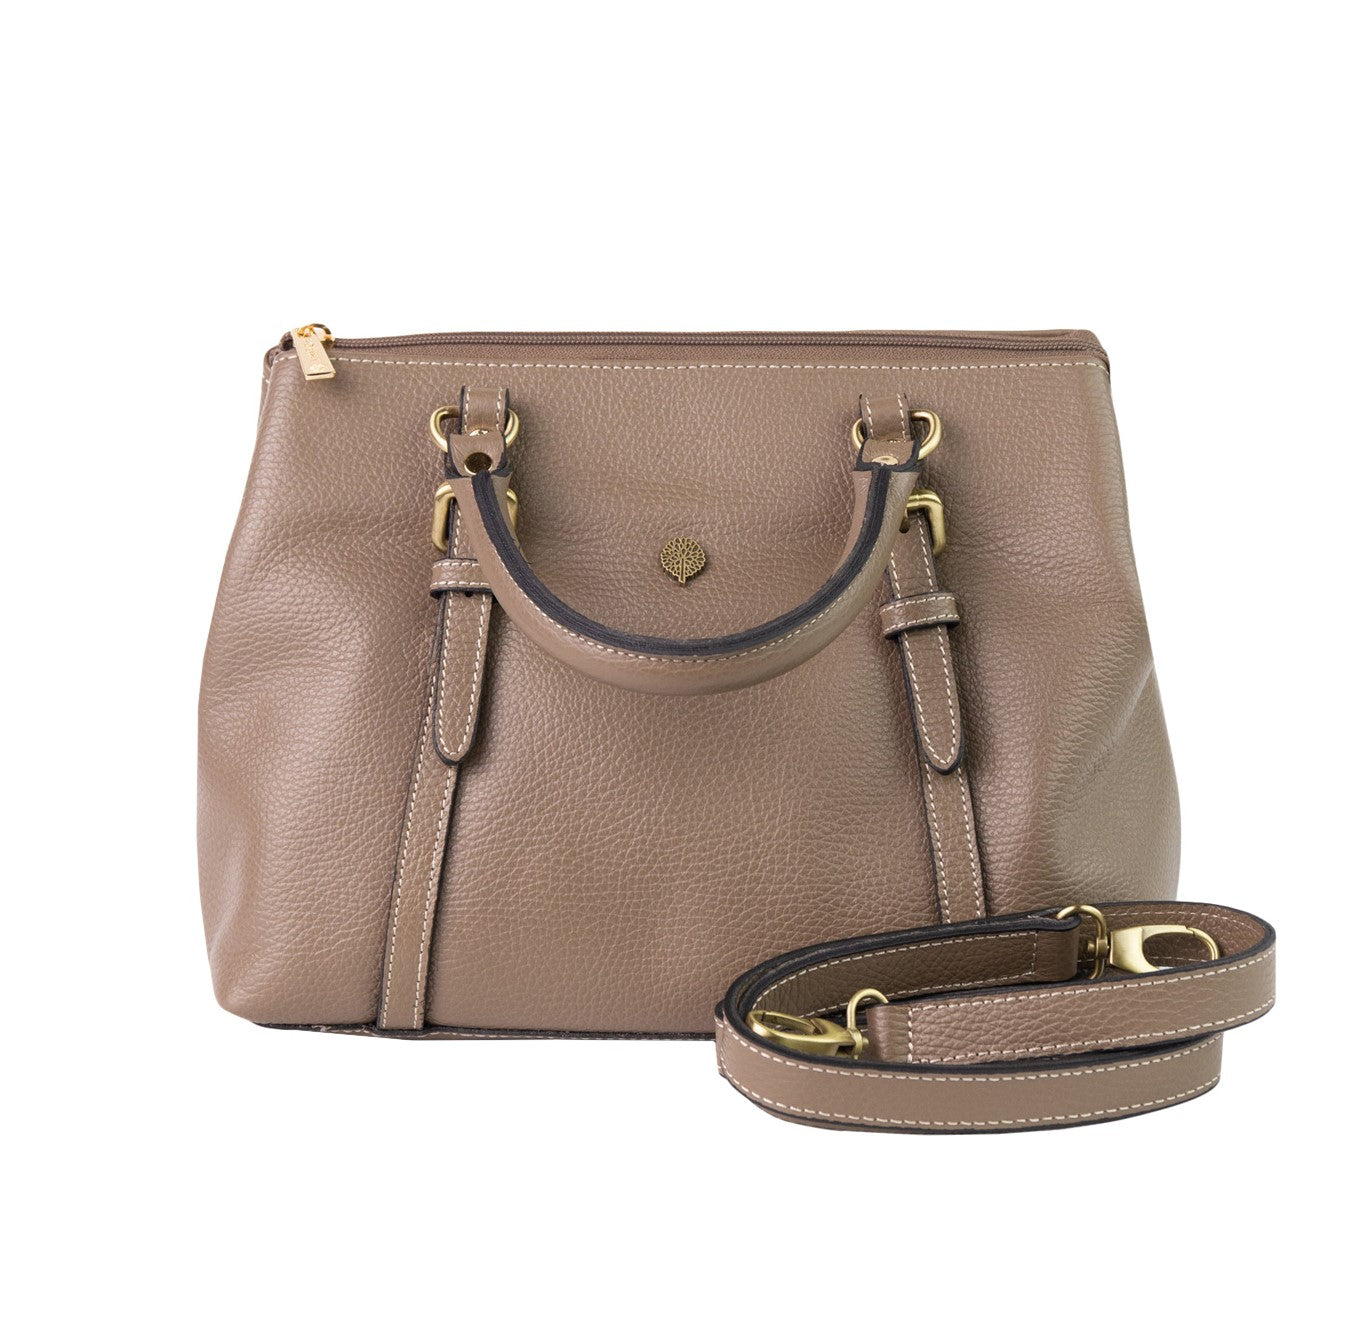 Terra Leather handbag with strap